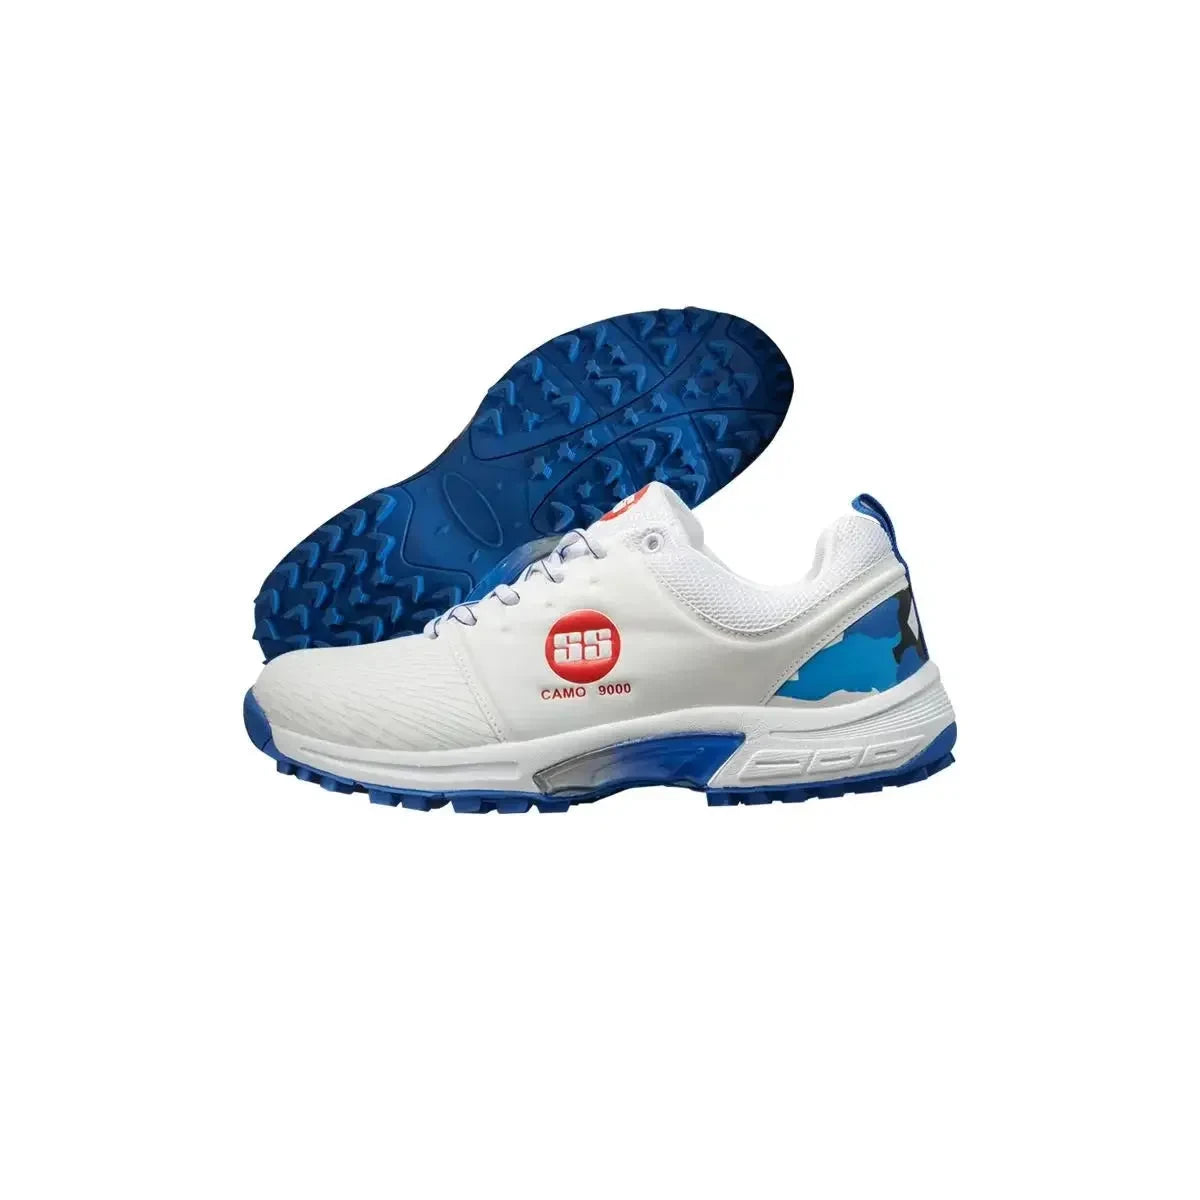 SS Camo 9000 Rubber Sole Cricket Shoes- Blue - Size 8 - FOOTWEAR - RUBBER SOLE